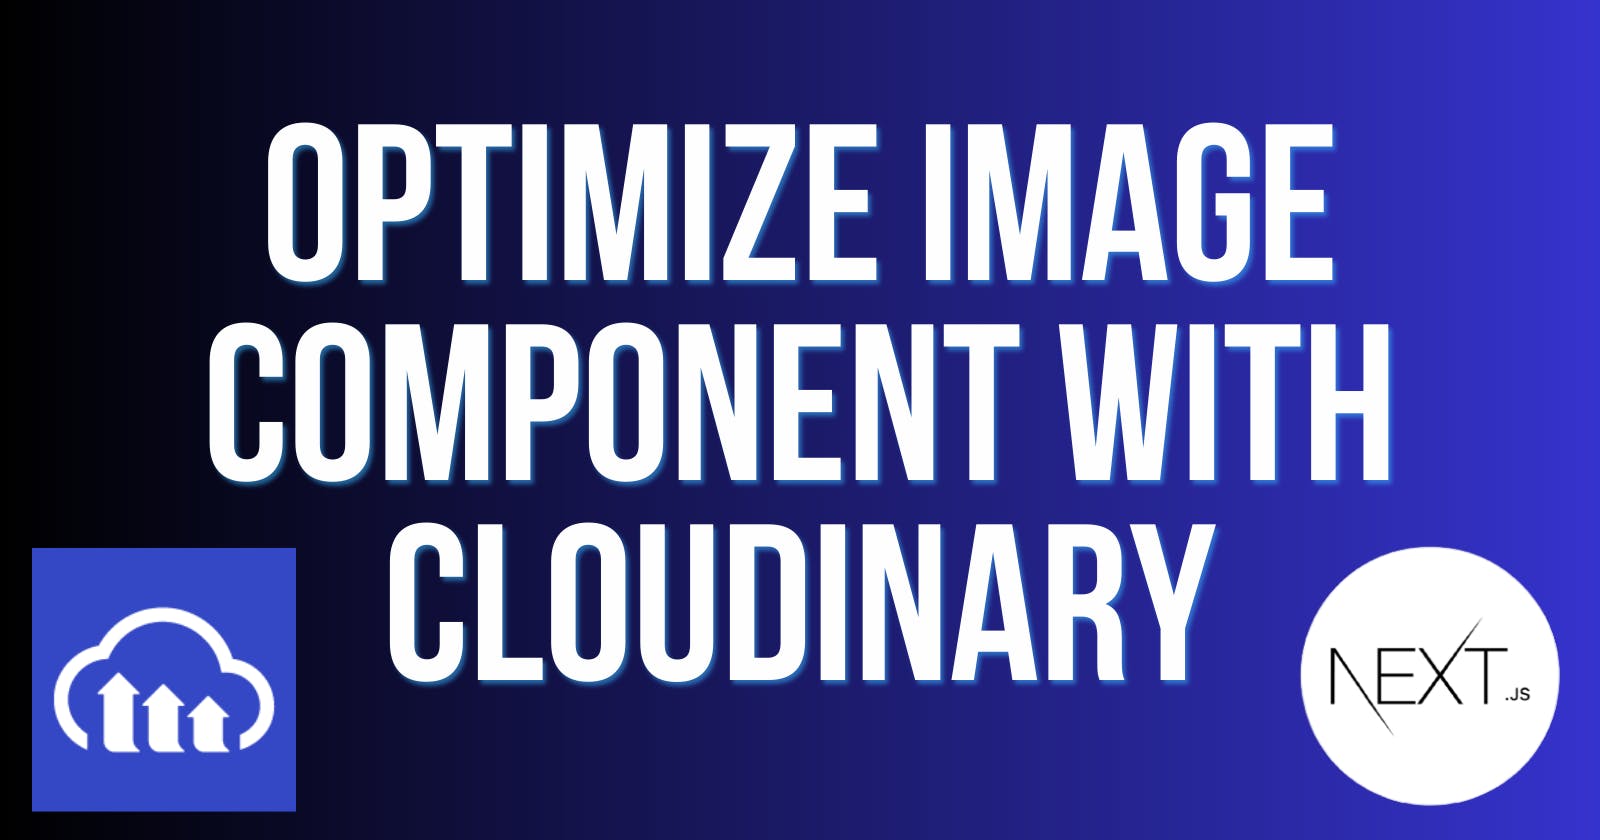 Next.js Image optimization with Cloudinary